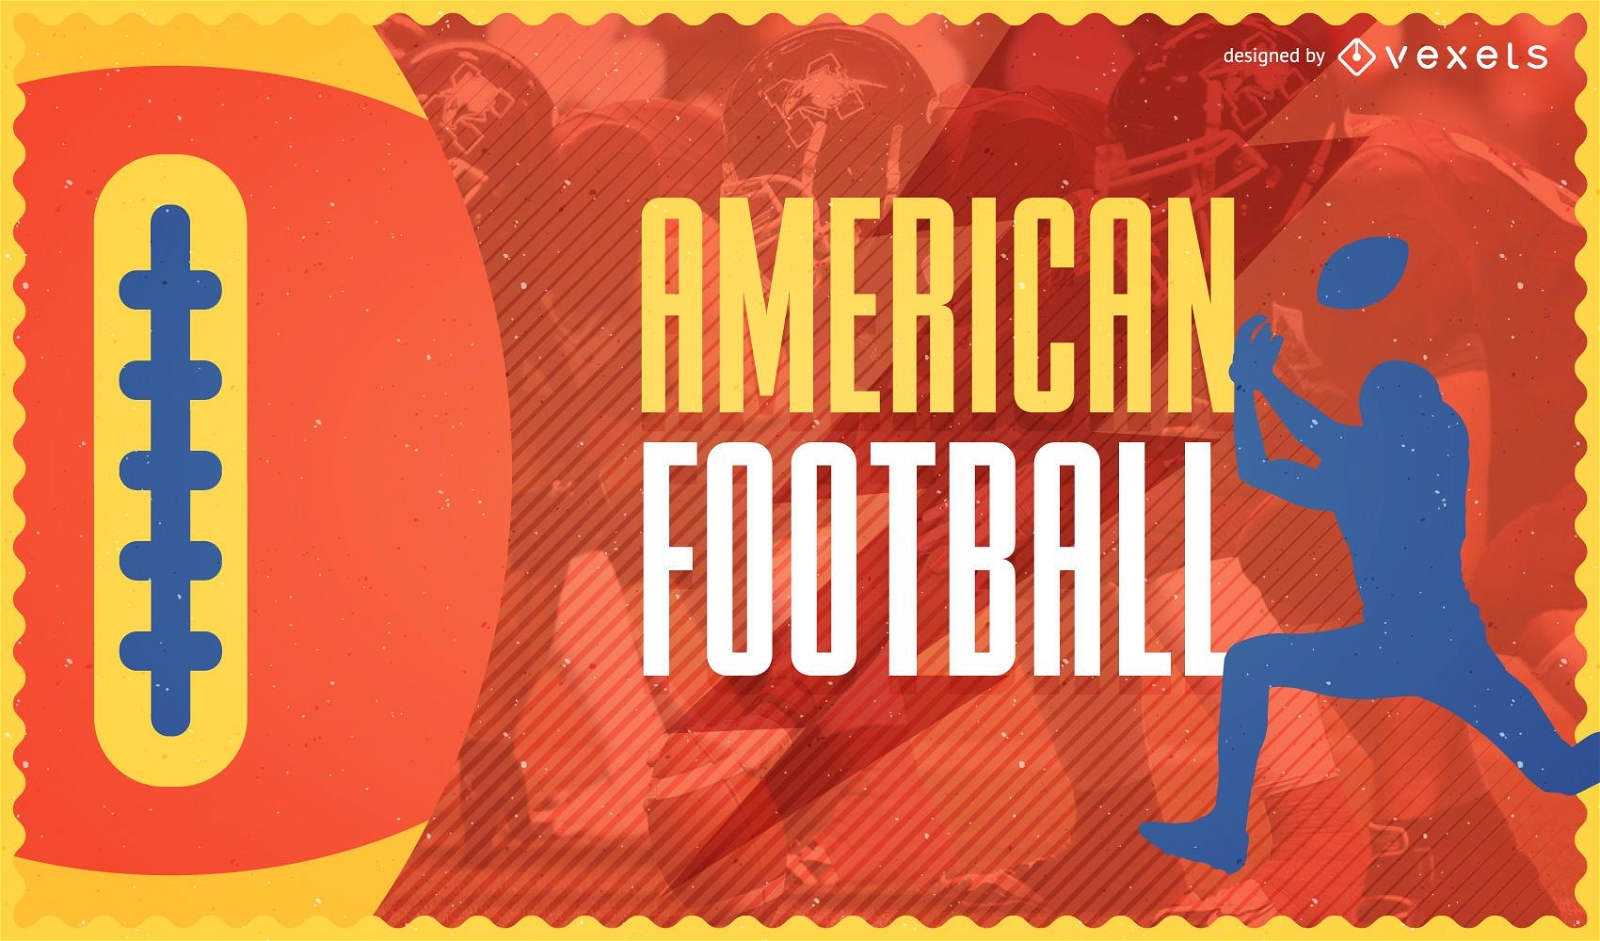 Colorful American football illustration